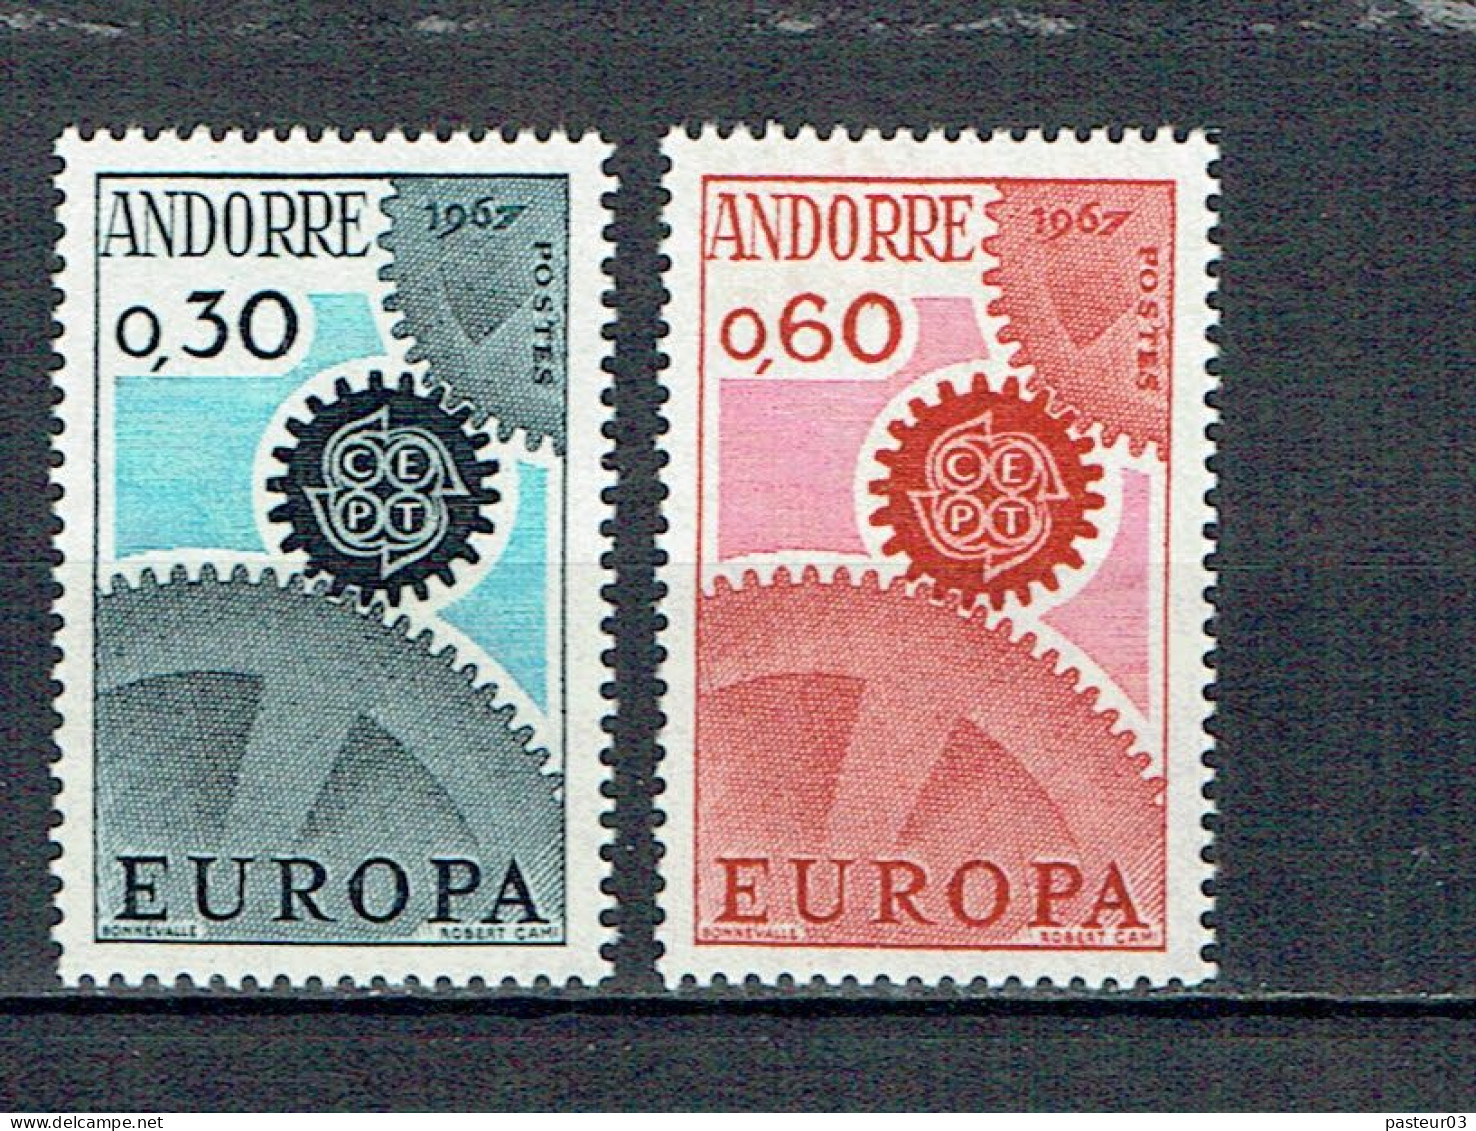 N° 179 - 180 Andorre Paire Europa Luxe - Nuevos